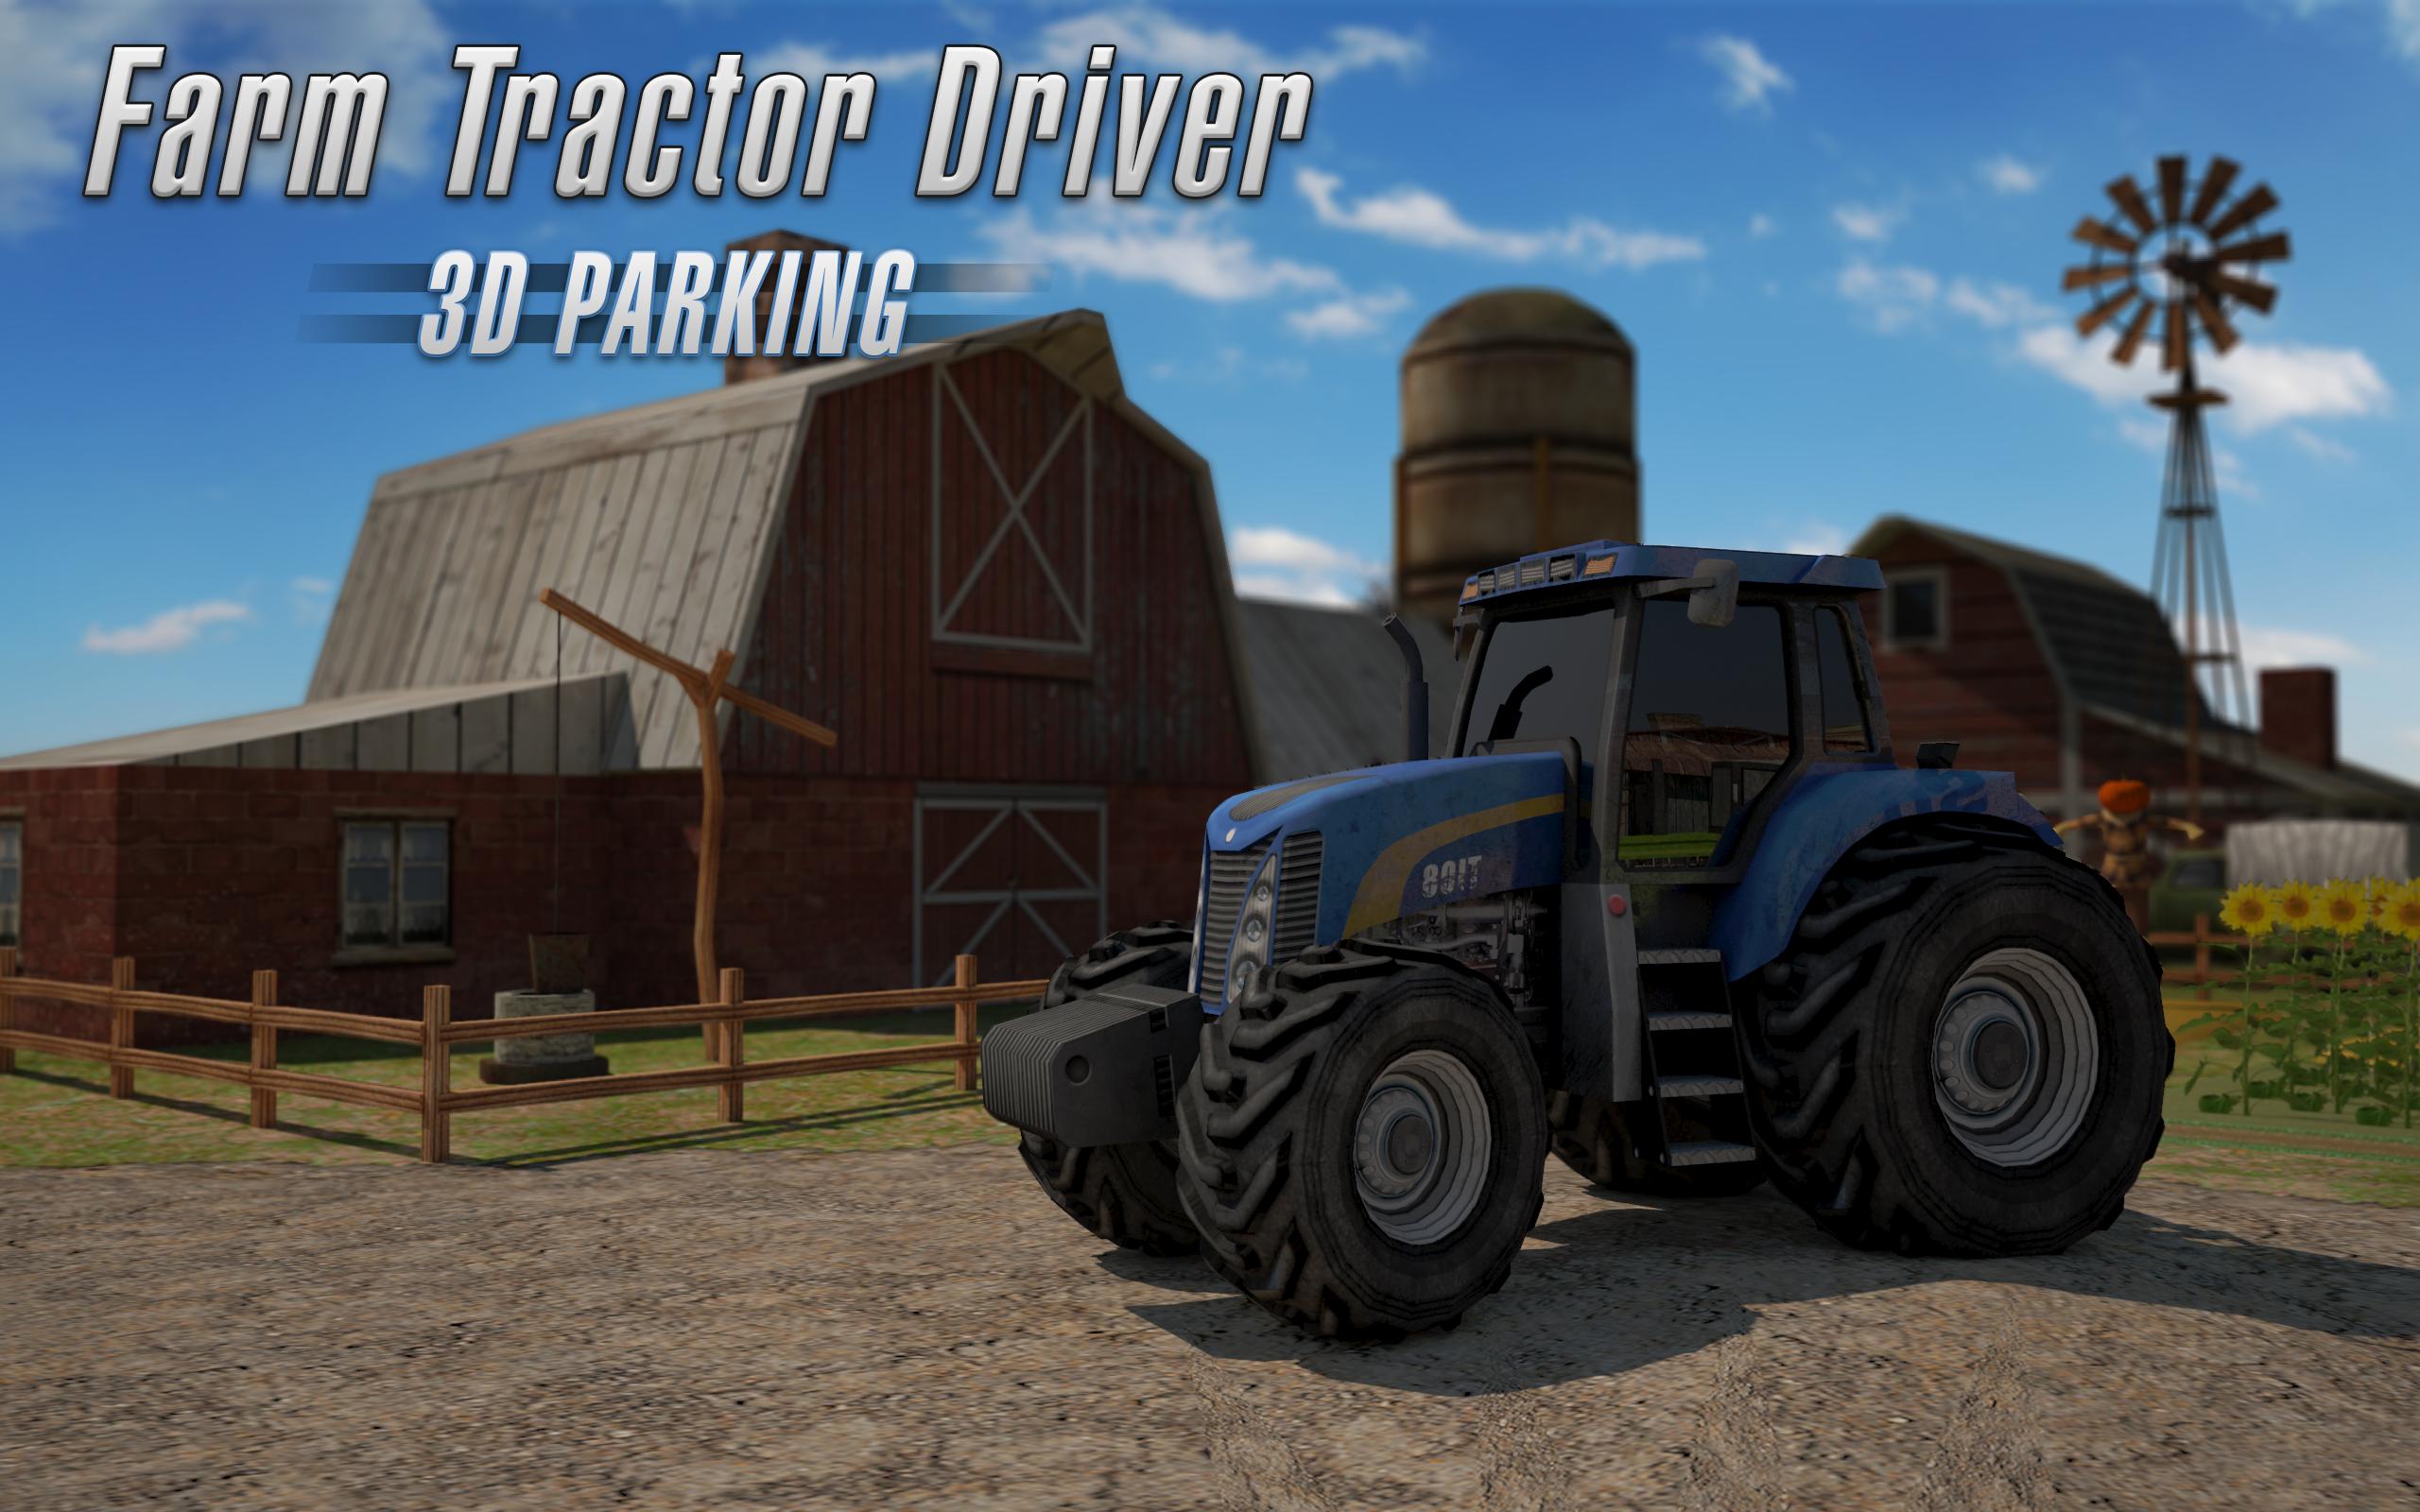 Tractor 3. Трактора игры. Симулятор тракториста. Фарминг трактор 3д. Фарминг трактор 3д симулятор парковки.